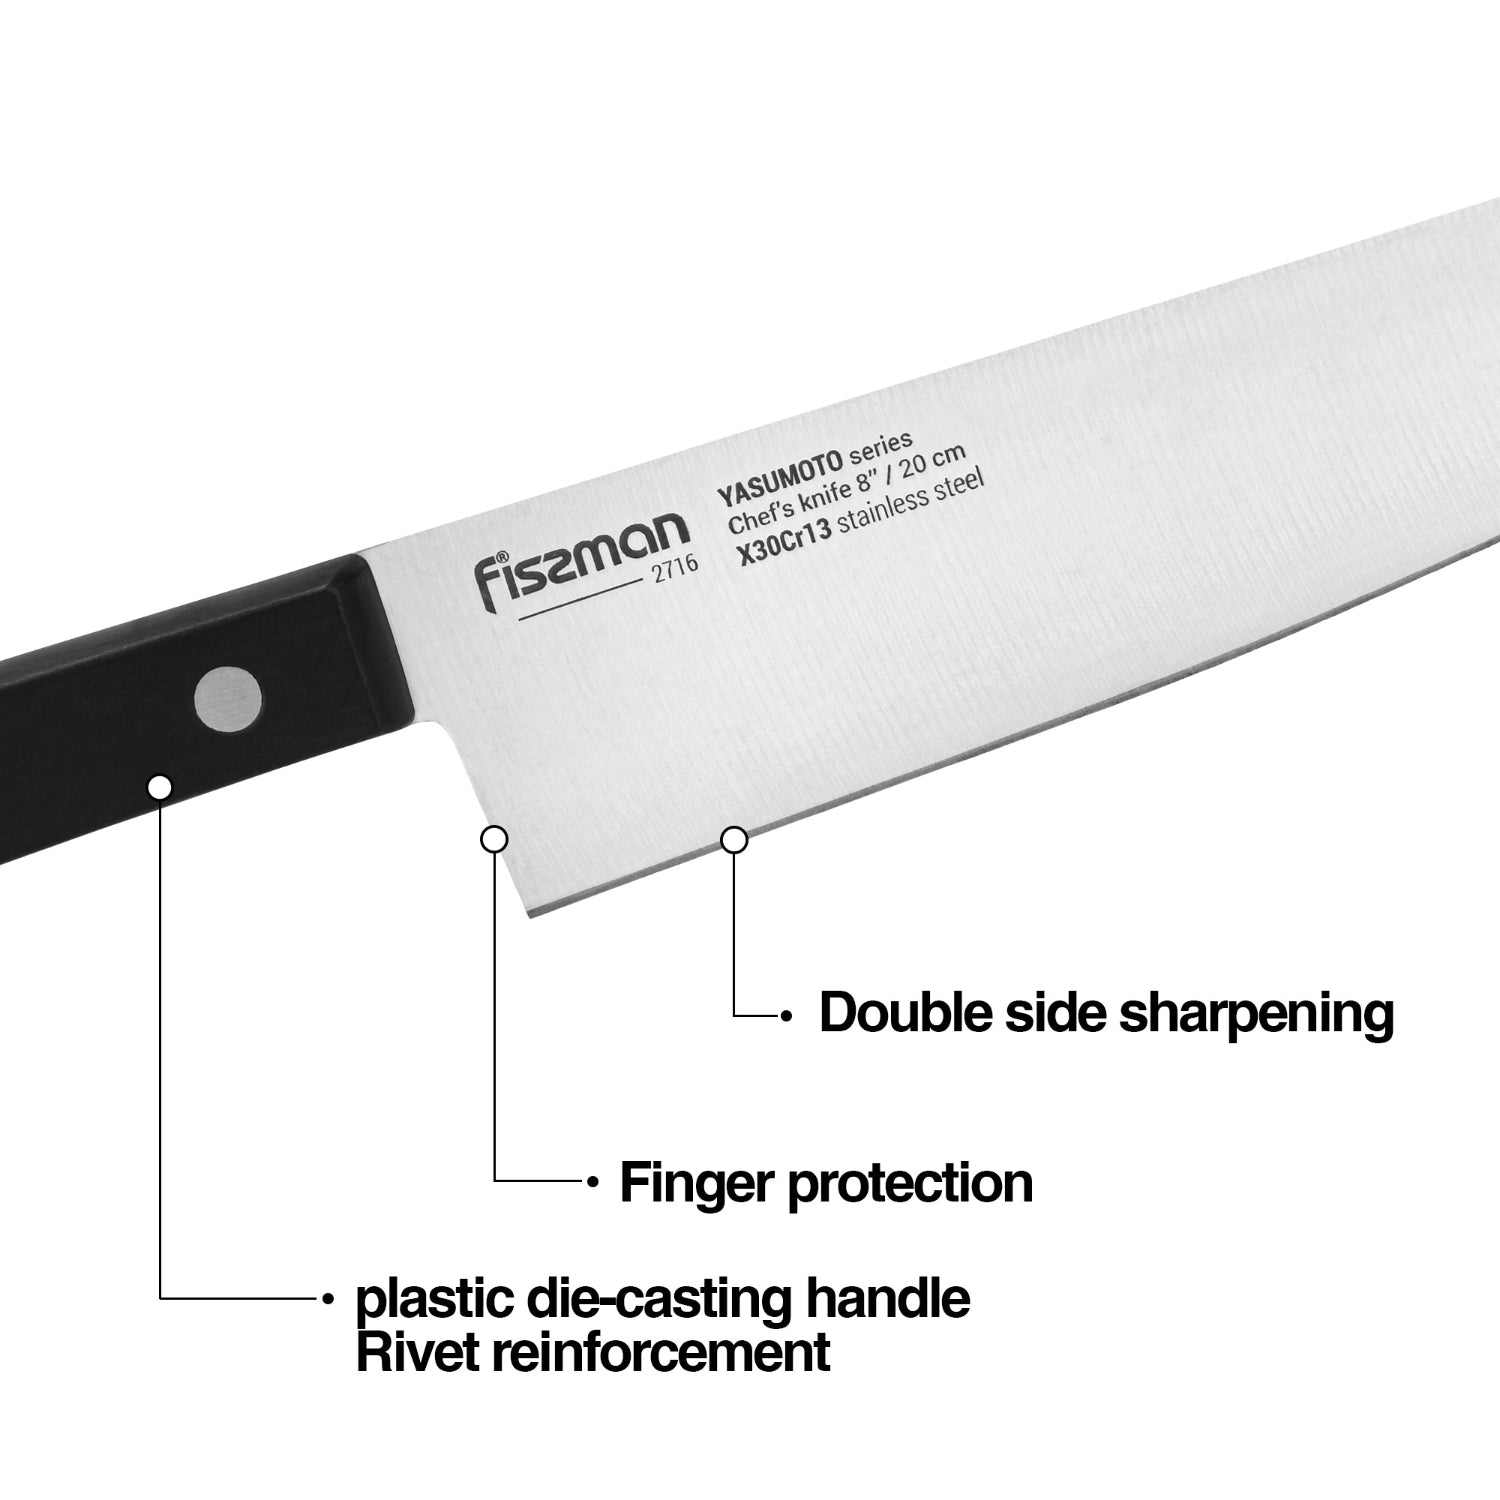 Fissman 13 Piece Knife Set Yasumoto with Wooden Block Chef Knife 20cm, Slicing Knife 20cm,Bread Knife 20cm,Utility Knife 13cm,Pairing Knife 9cm, Steak Knife,MultiFunctional Scissor 20cm